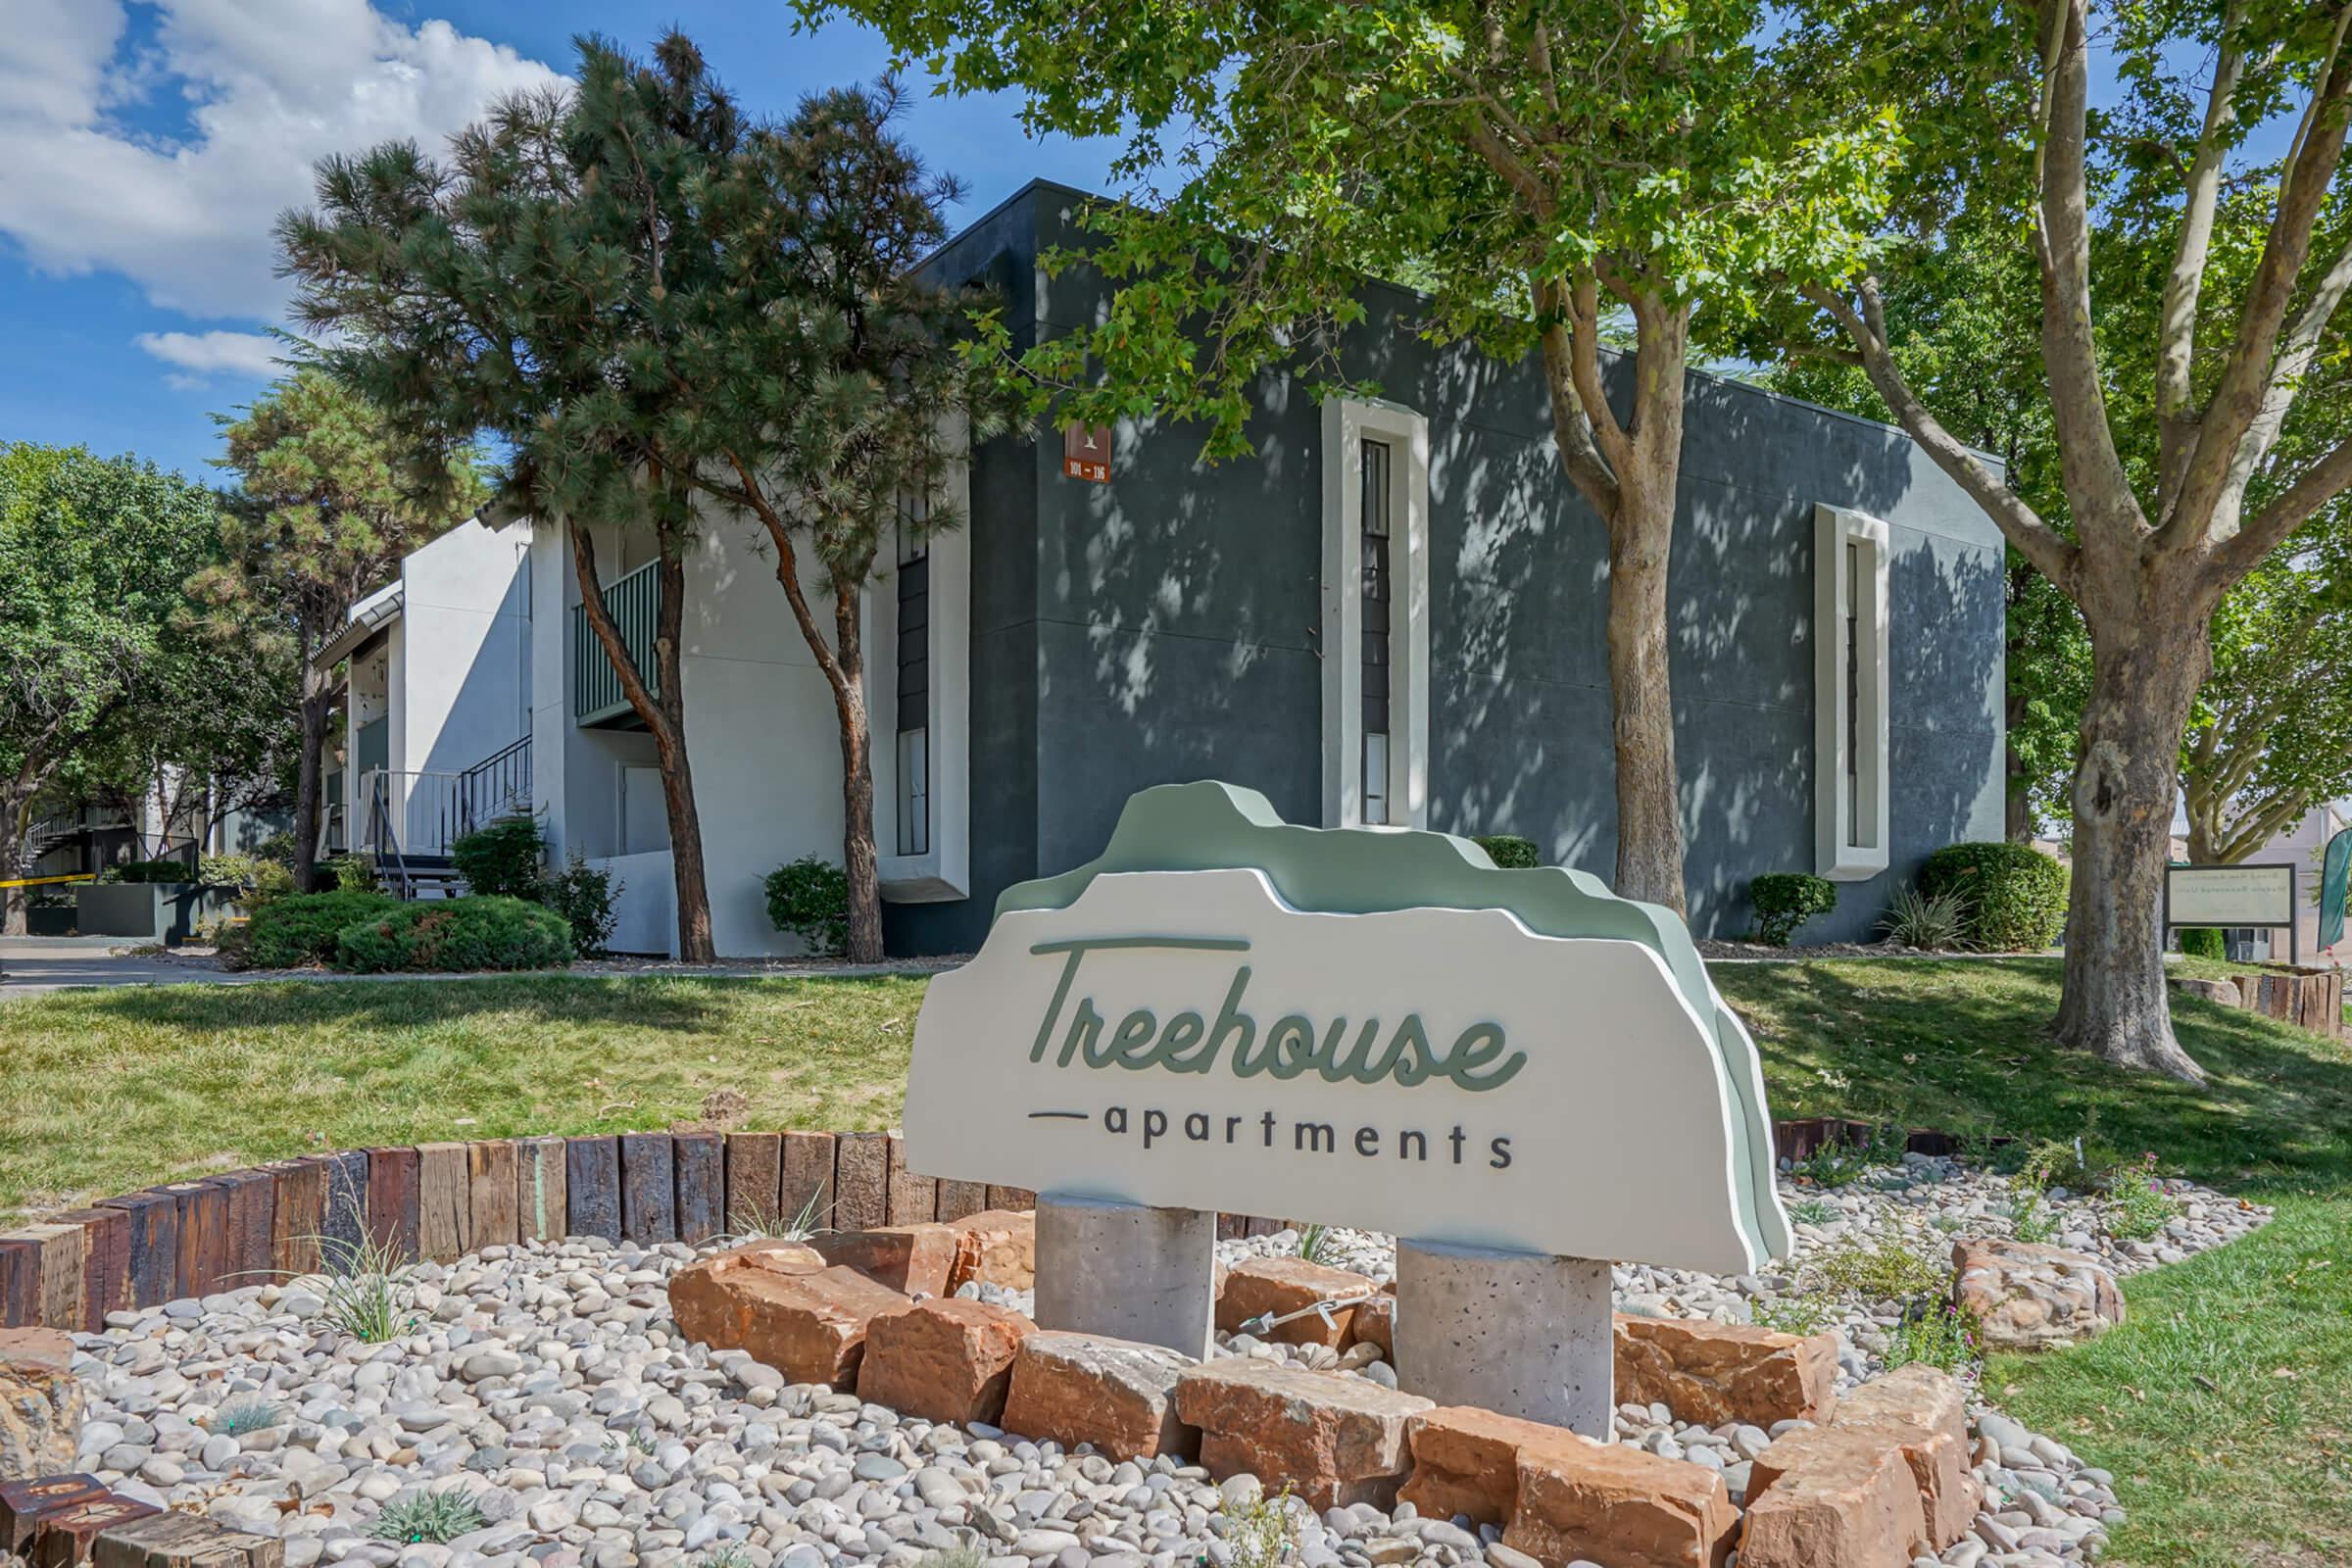 Treehouse Apartments Exterior in Albuquerque, New Mexico